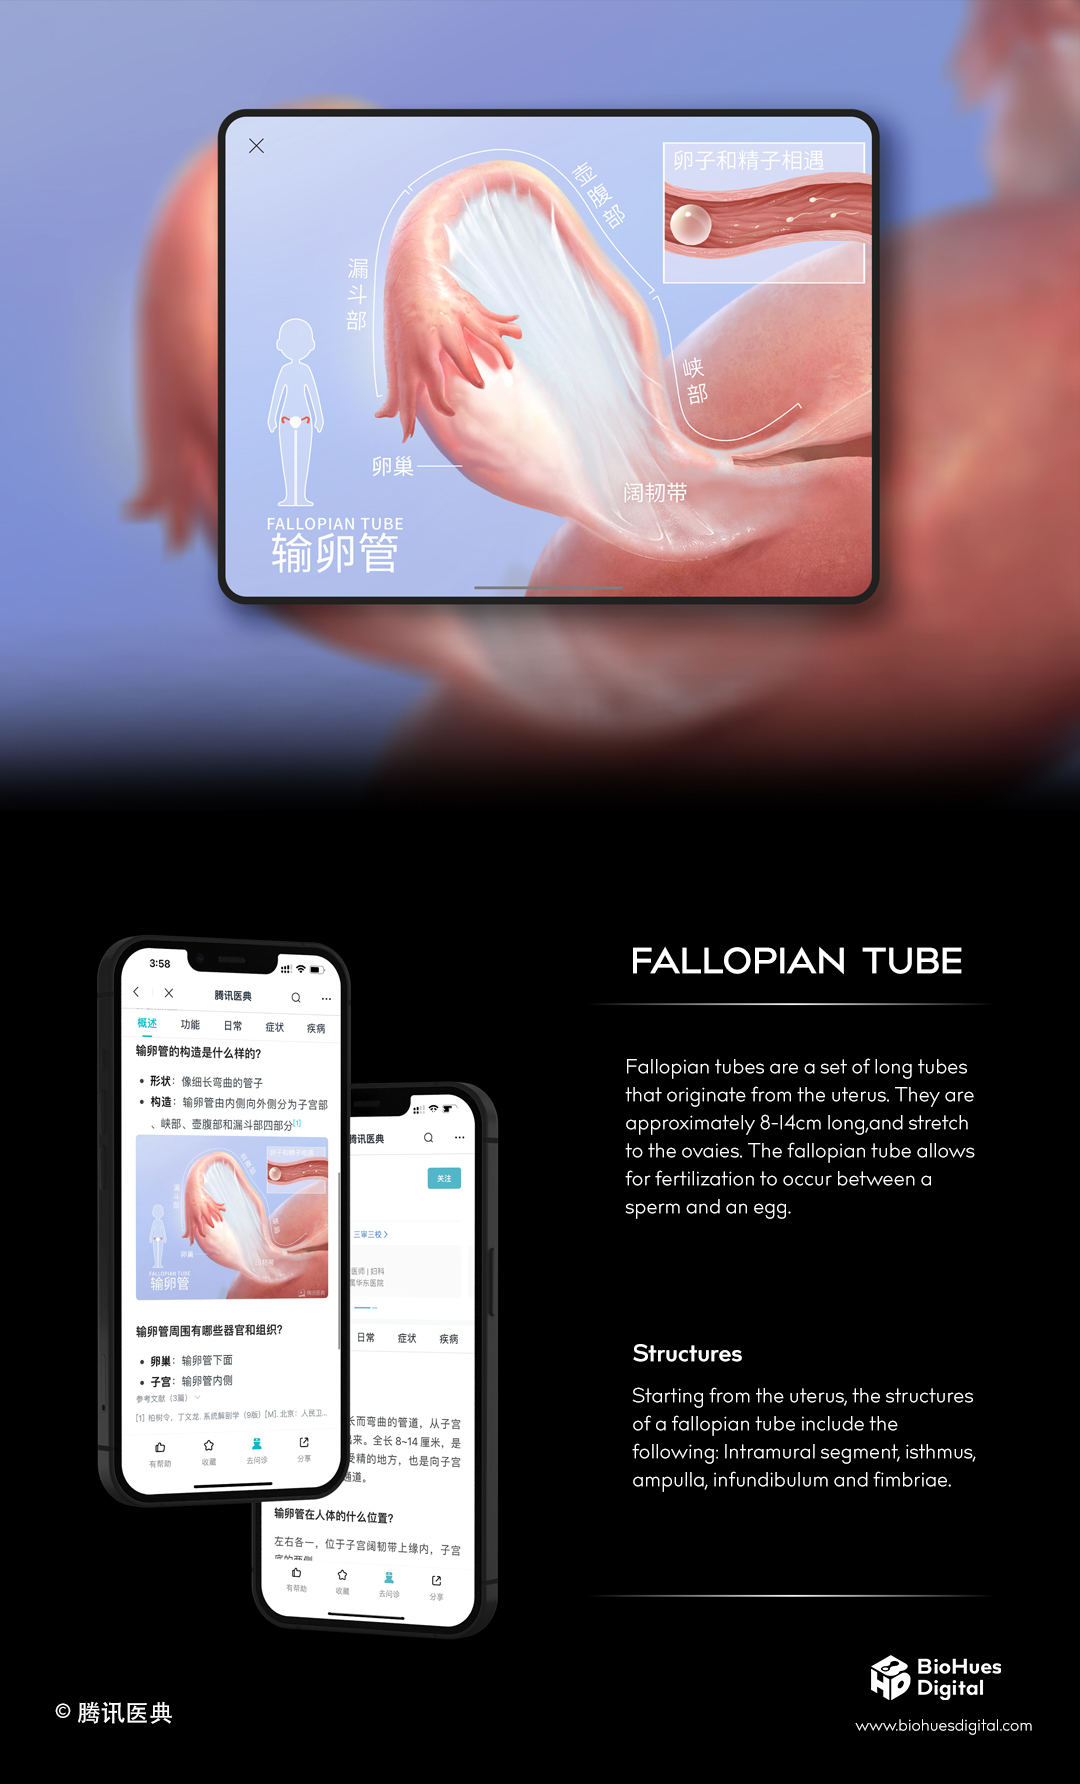 image of uterus and fallopian tube